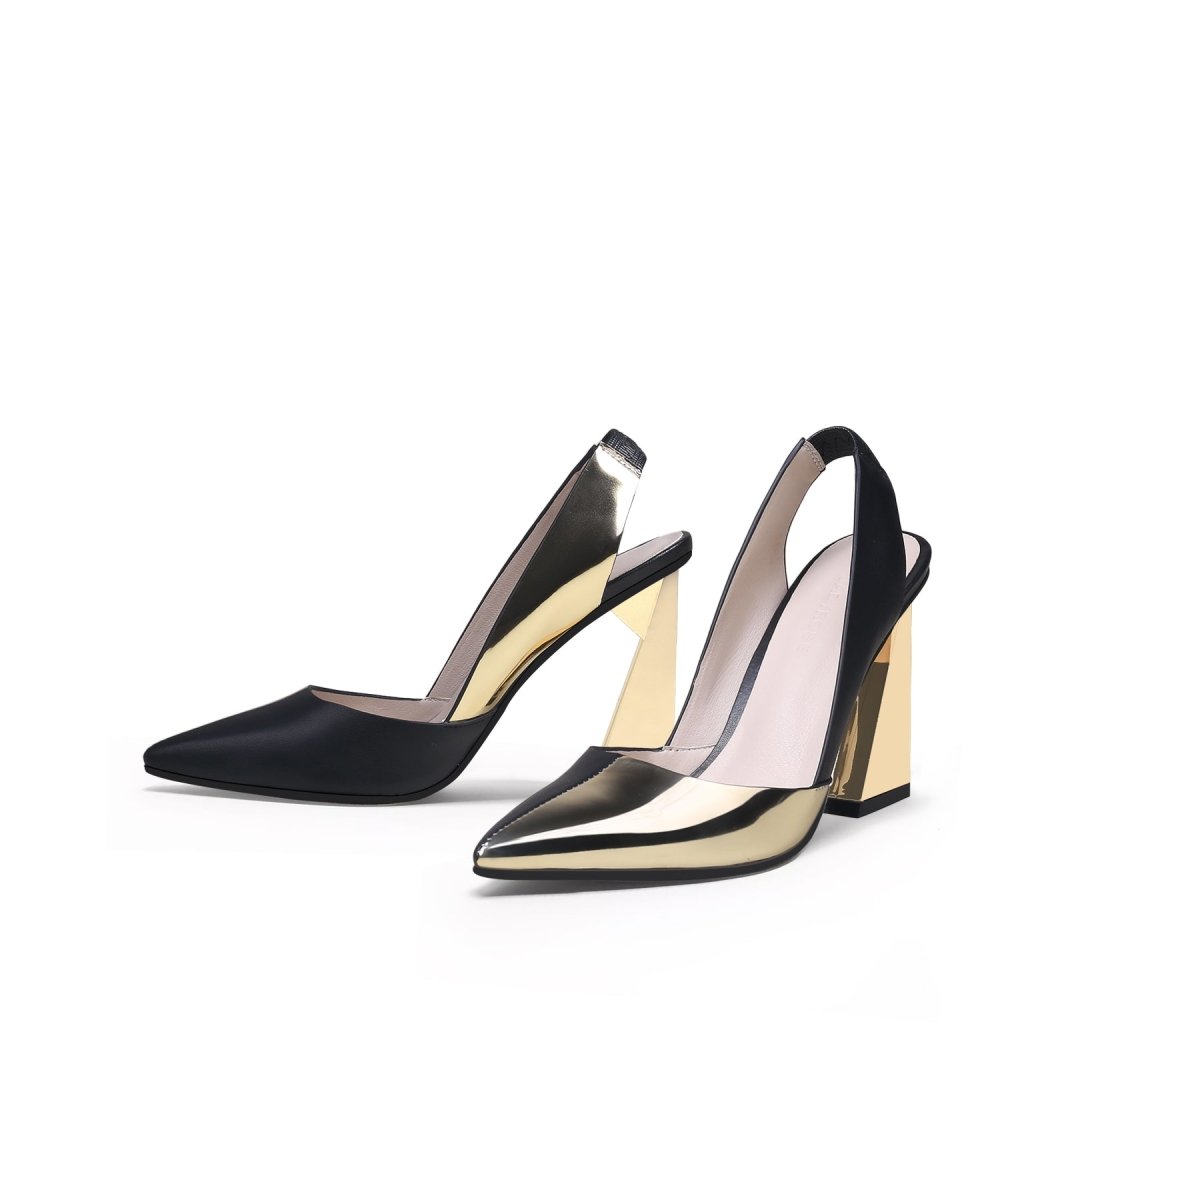 Division Trape-heel Gold Sandals - 0cm